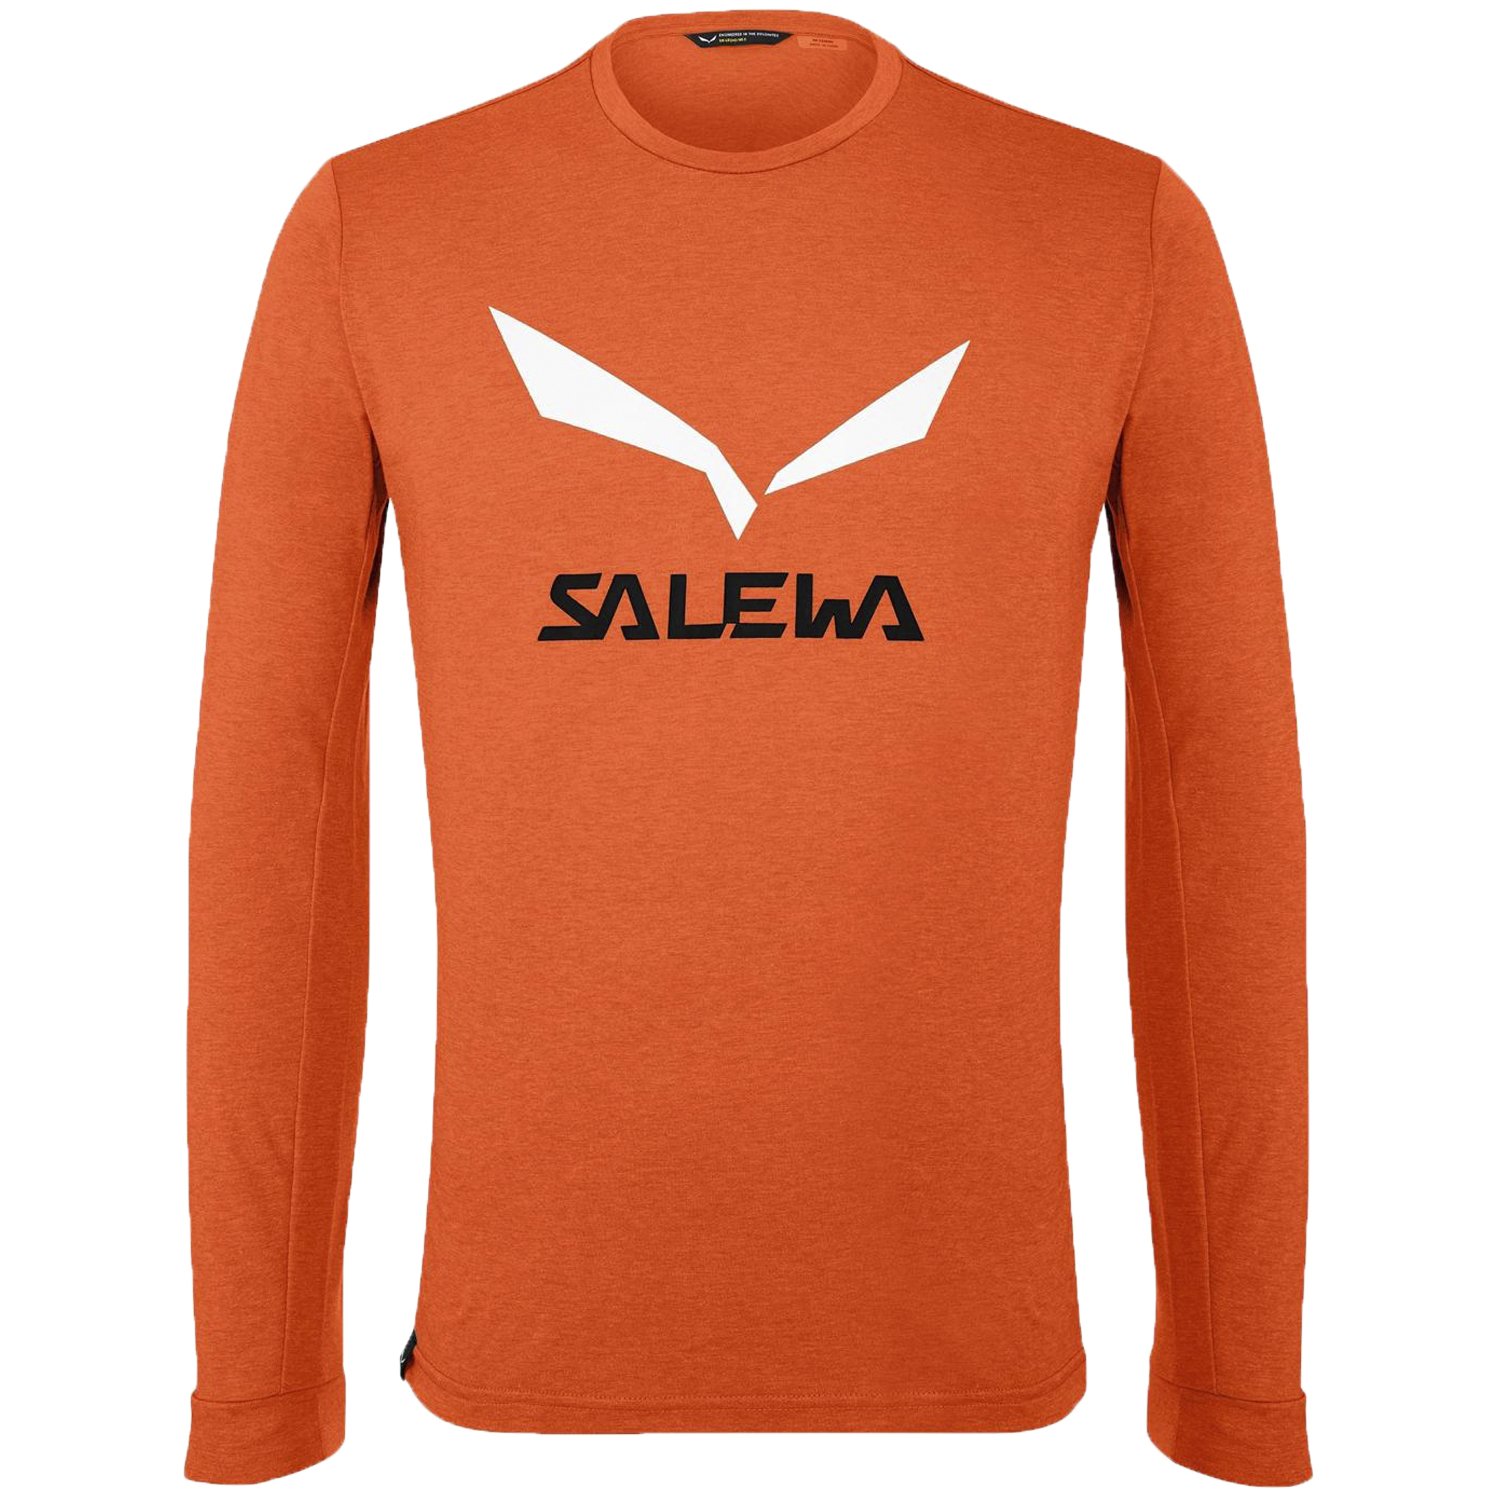 Футболка Salewa Solidlogo Dry Men's L/S Tee Red Orange Melange, с длинным рукавом, мужская, 00-0000027340_4156 mjolk футболка с длинным рукавом desert rose